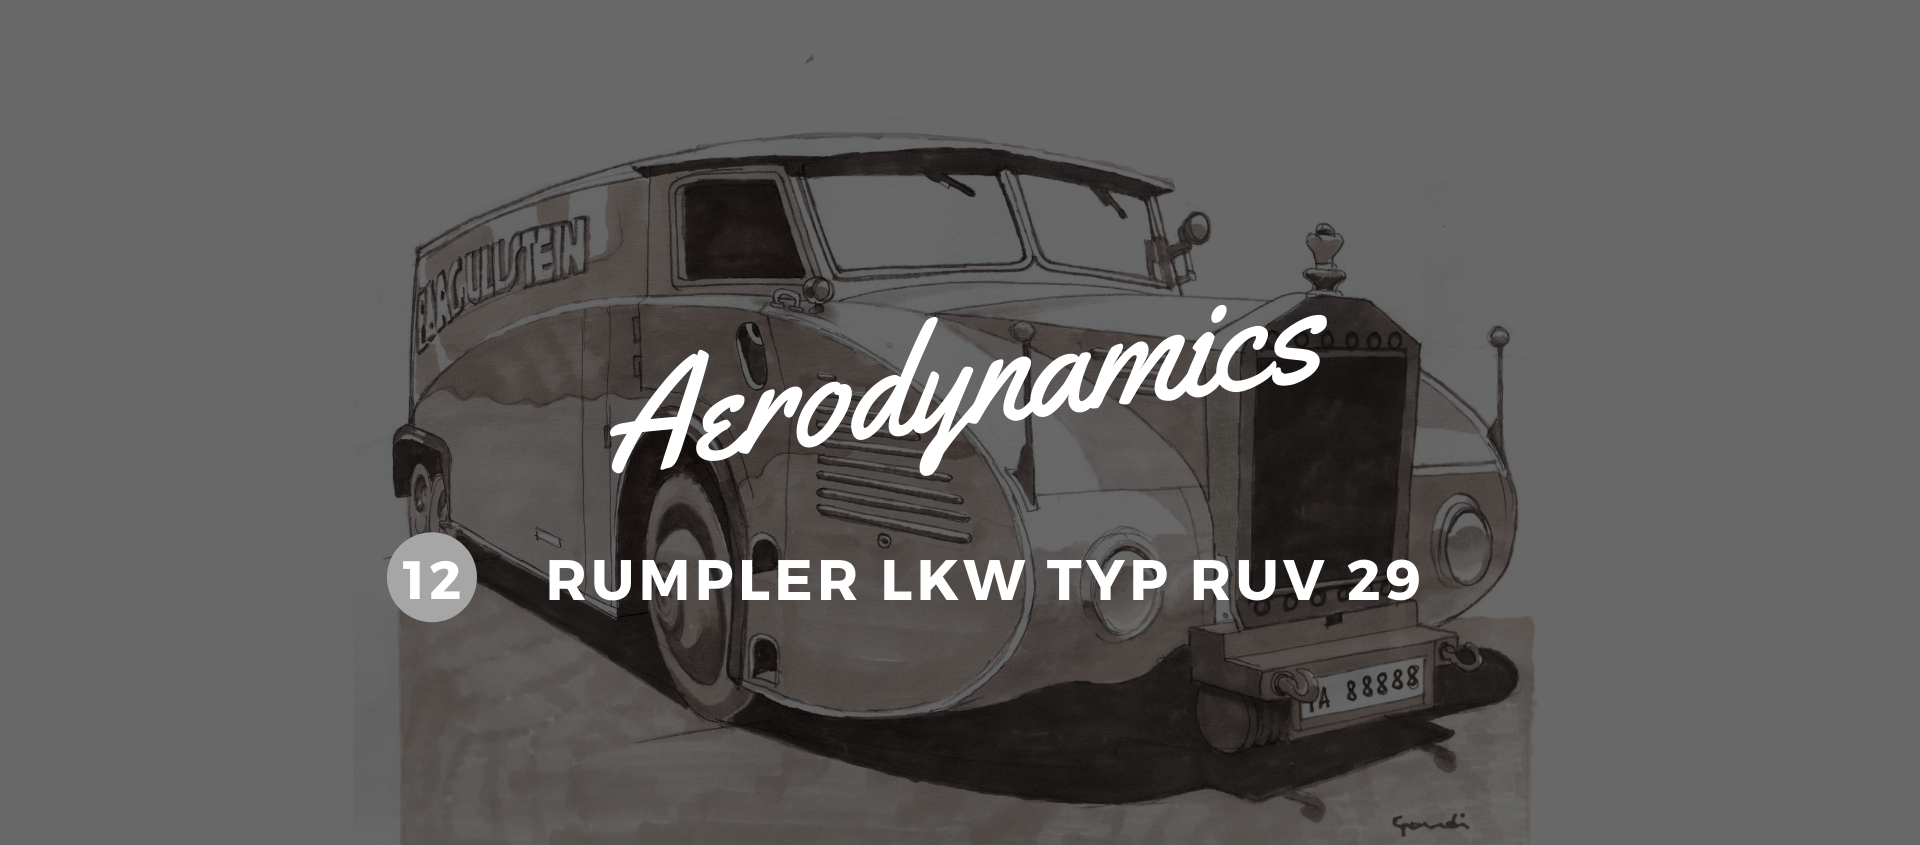 Rumpler LKW typ RuV29. Delivering news hot off the press